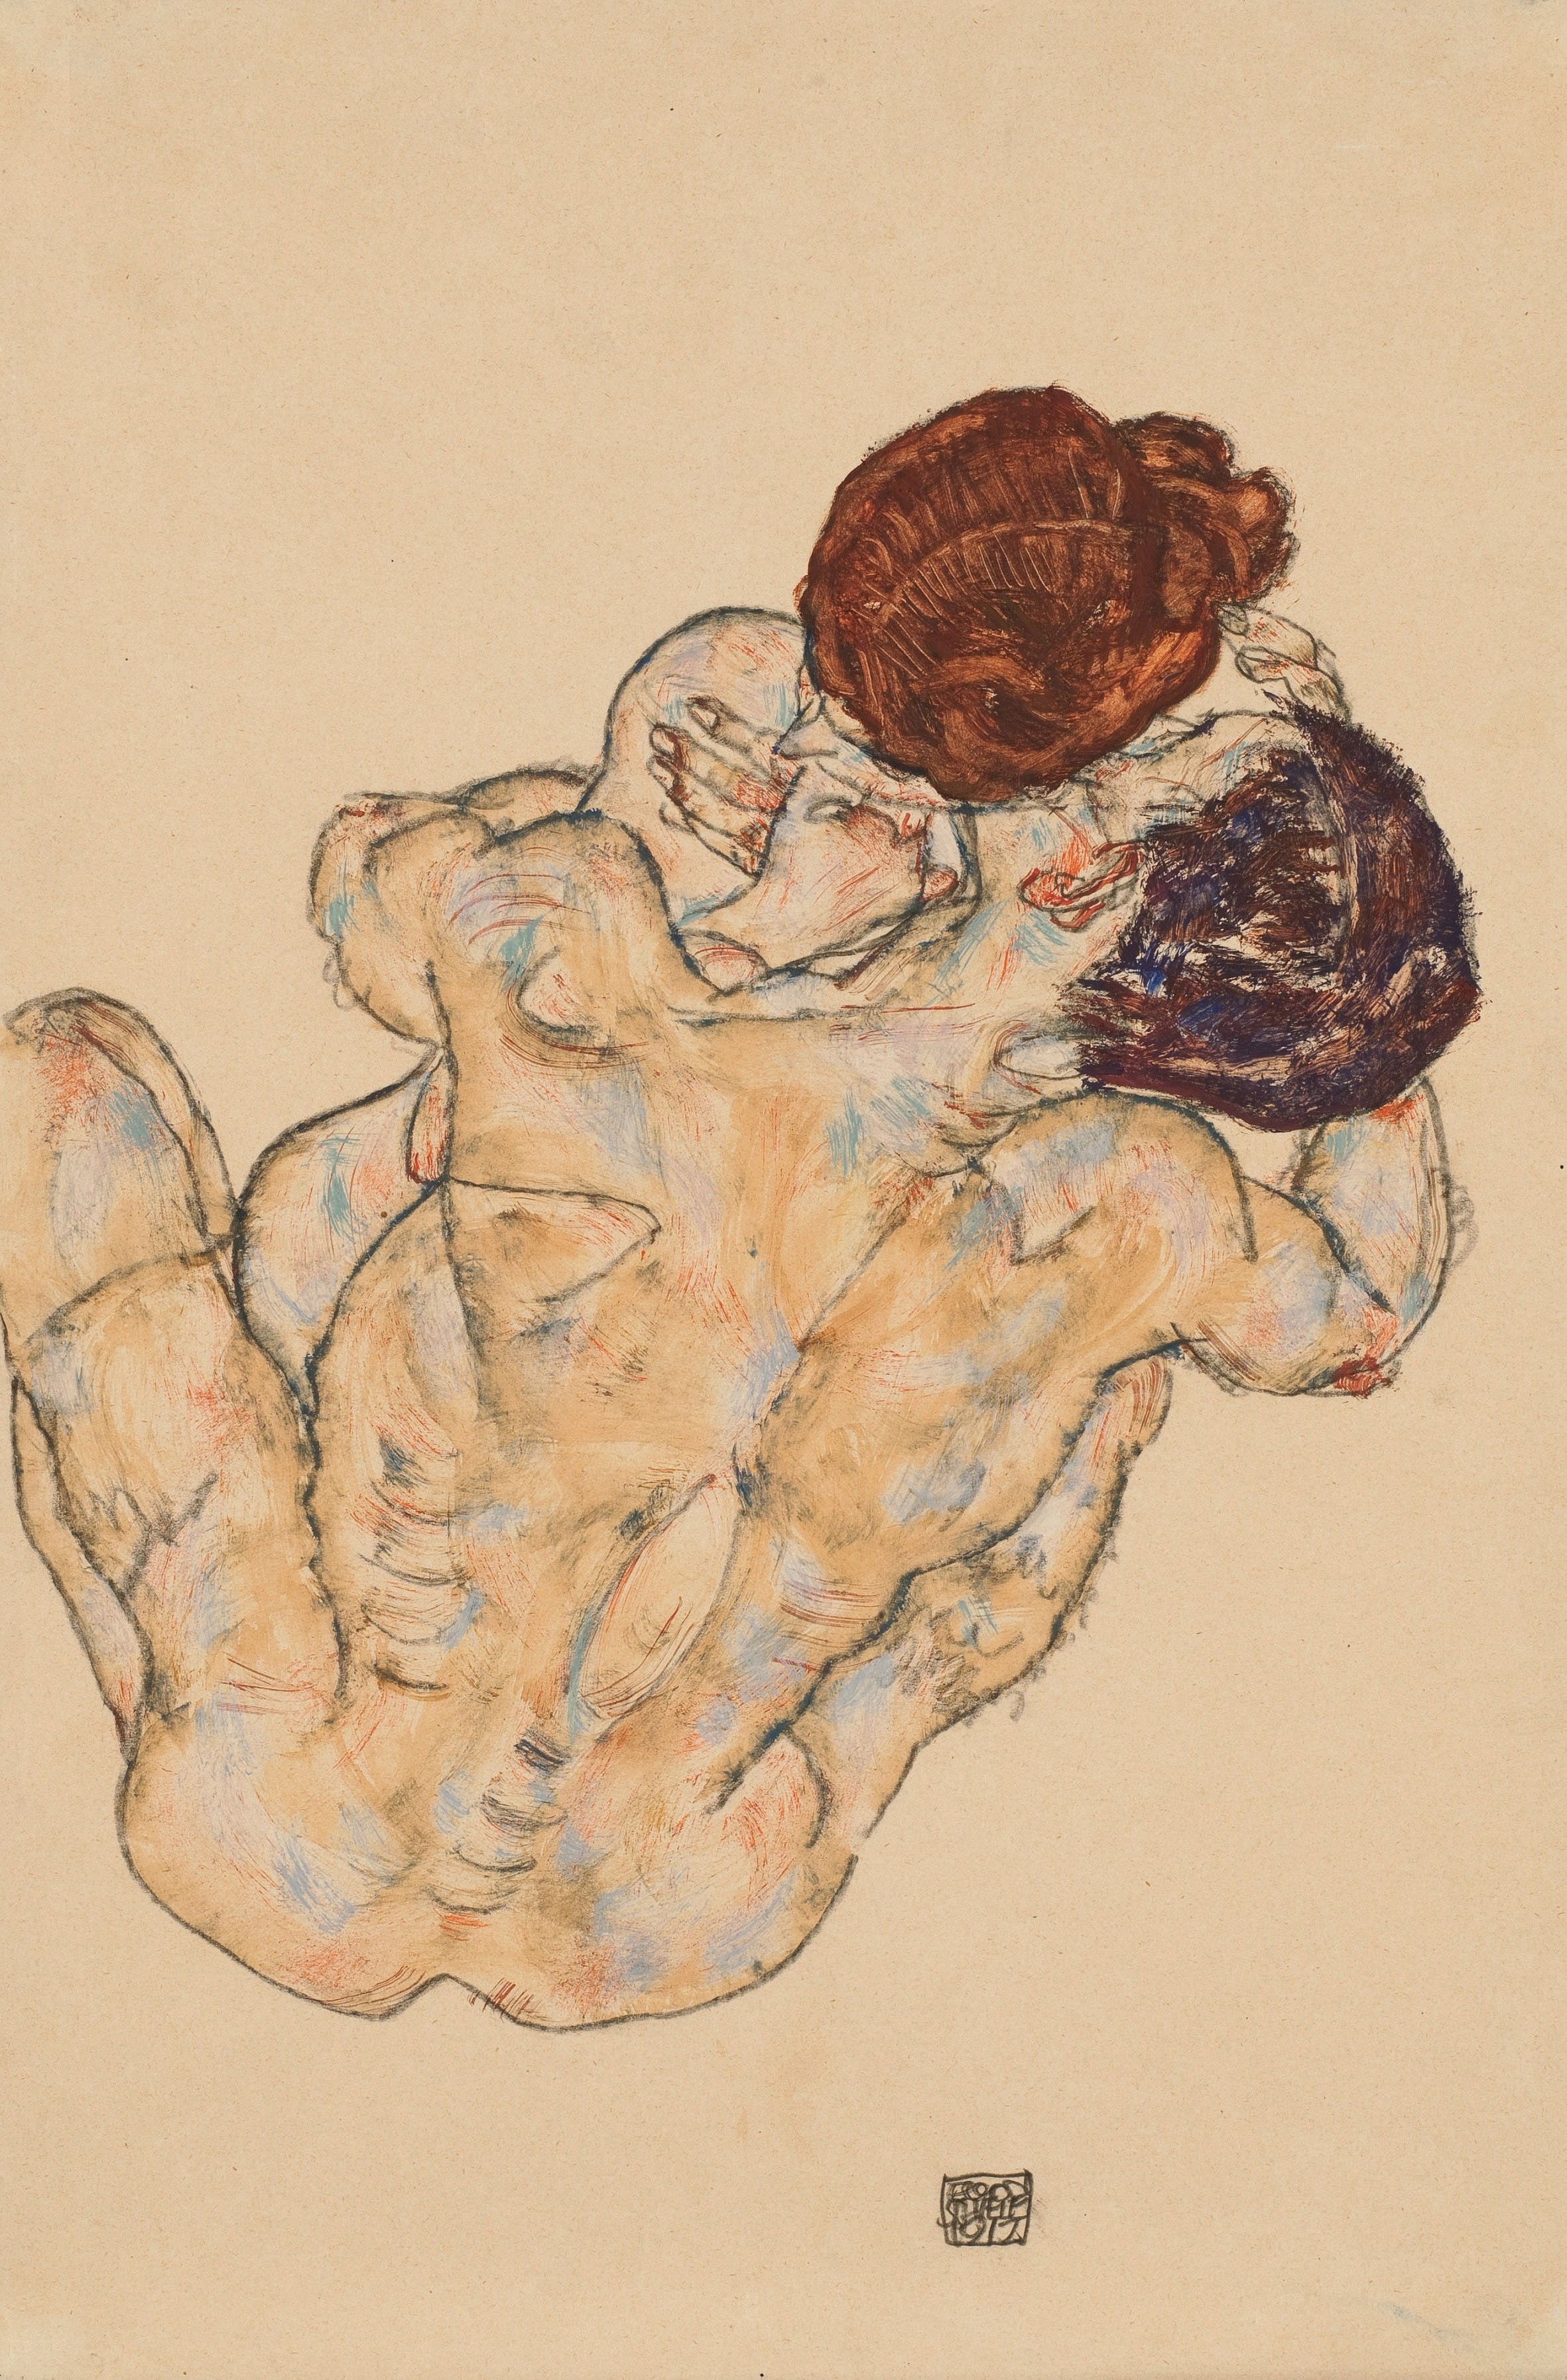 Die Umarmung by Egon Schiele - 1917 - 48.9 x 28.9 cm Private Sammlung